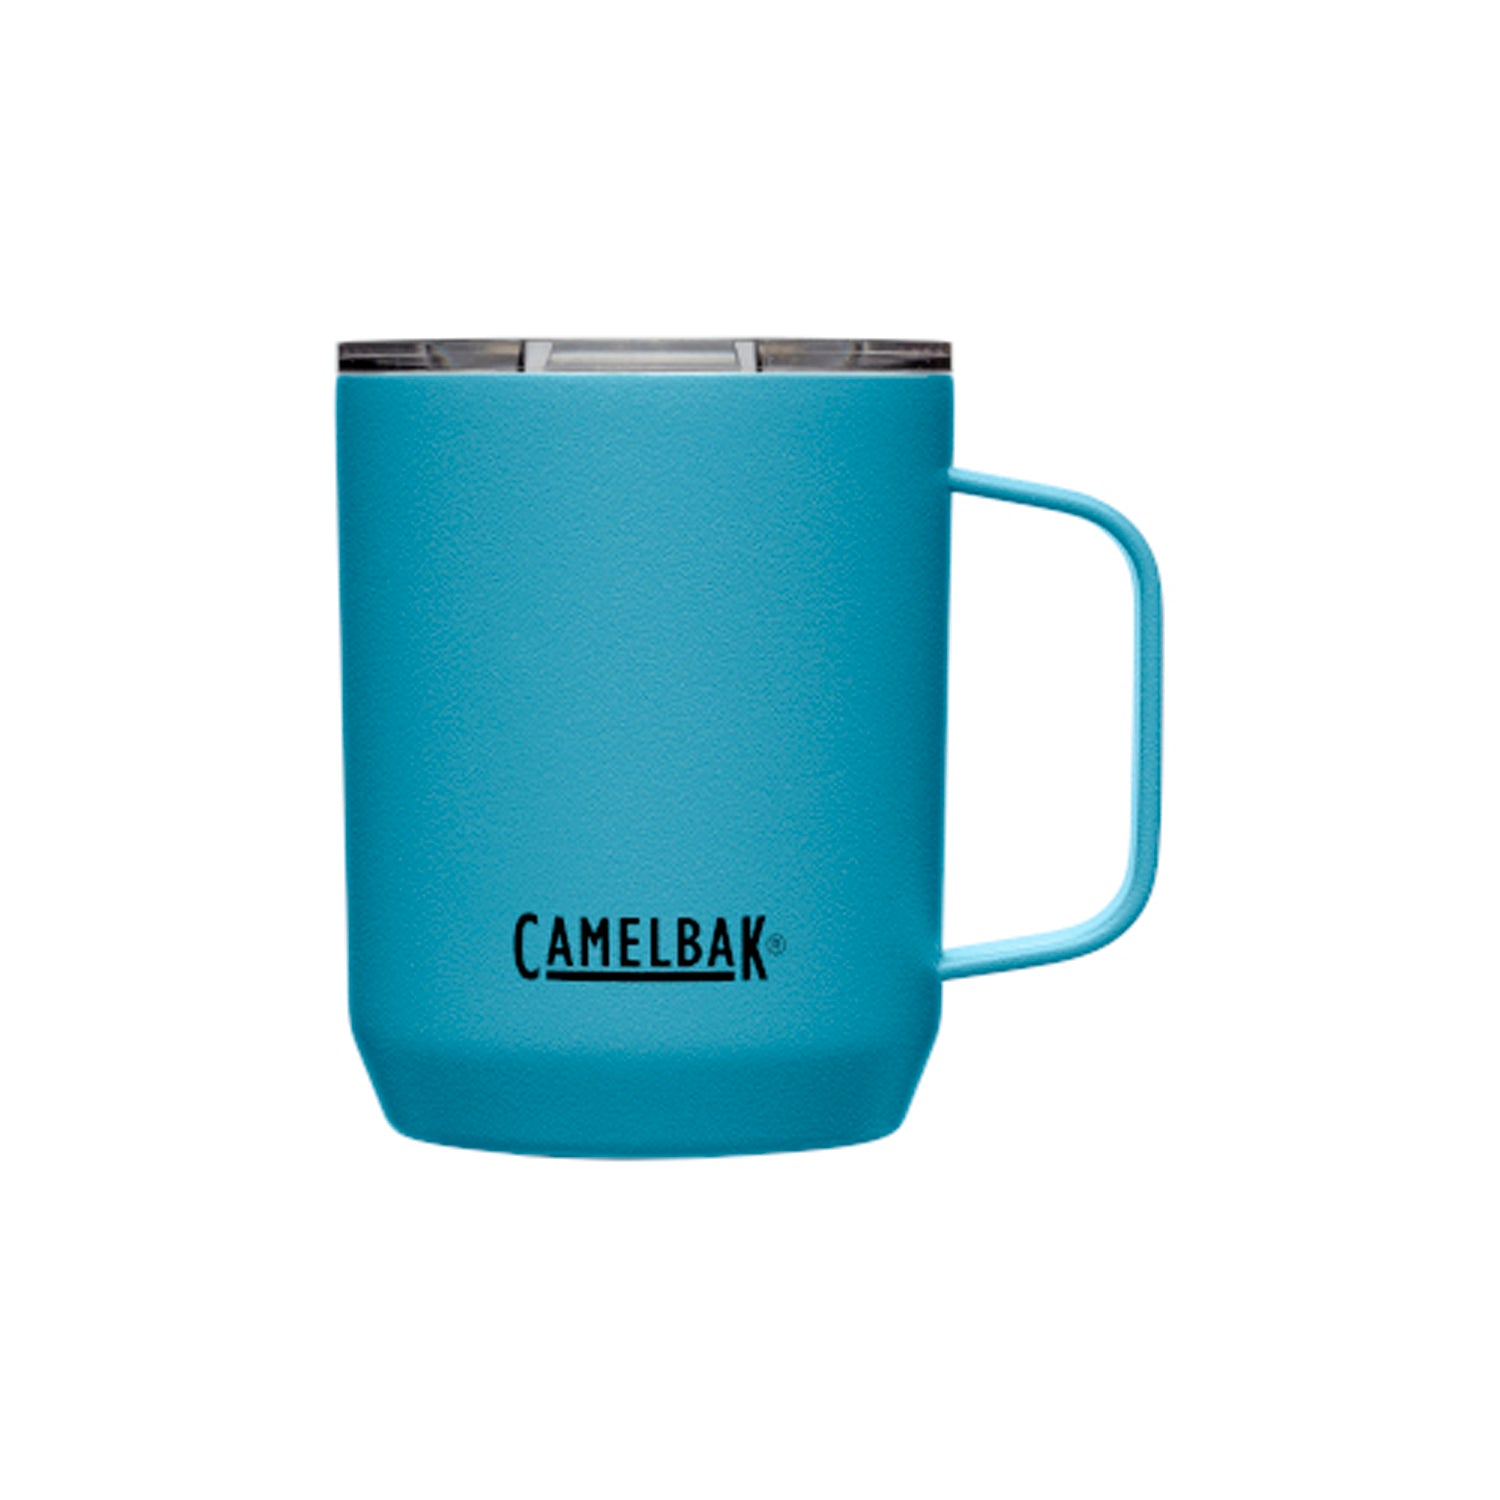 Camelbak Camp Mug Vacuum Stainless Steel, Larkspur - 12oz/350ML - Best Price online Prokicksports.com